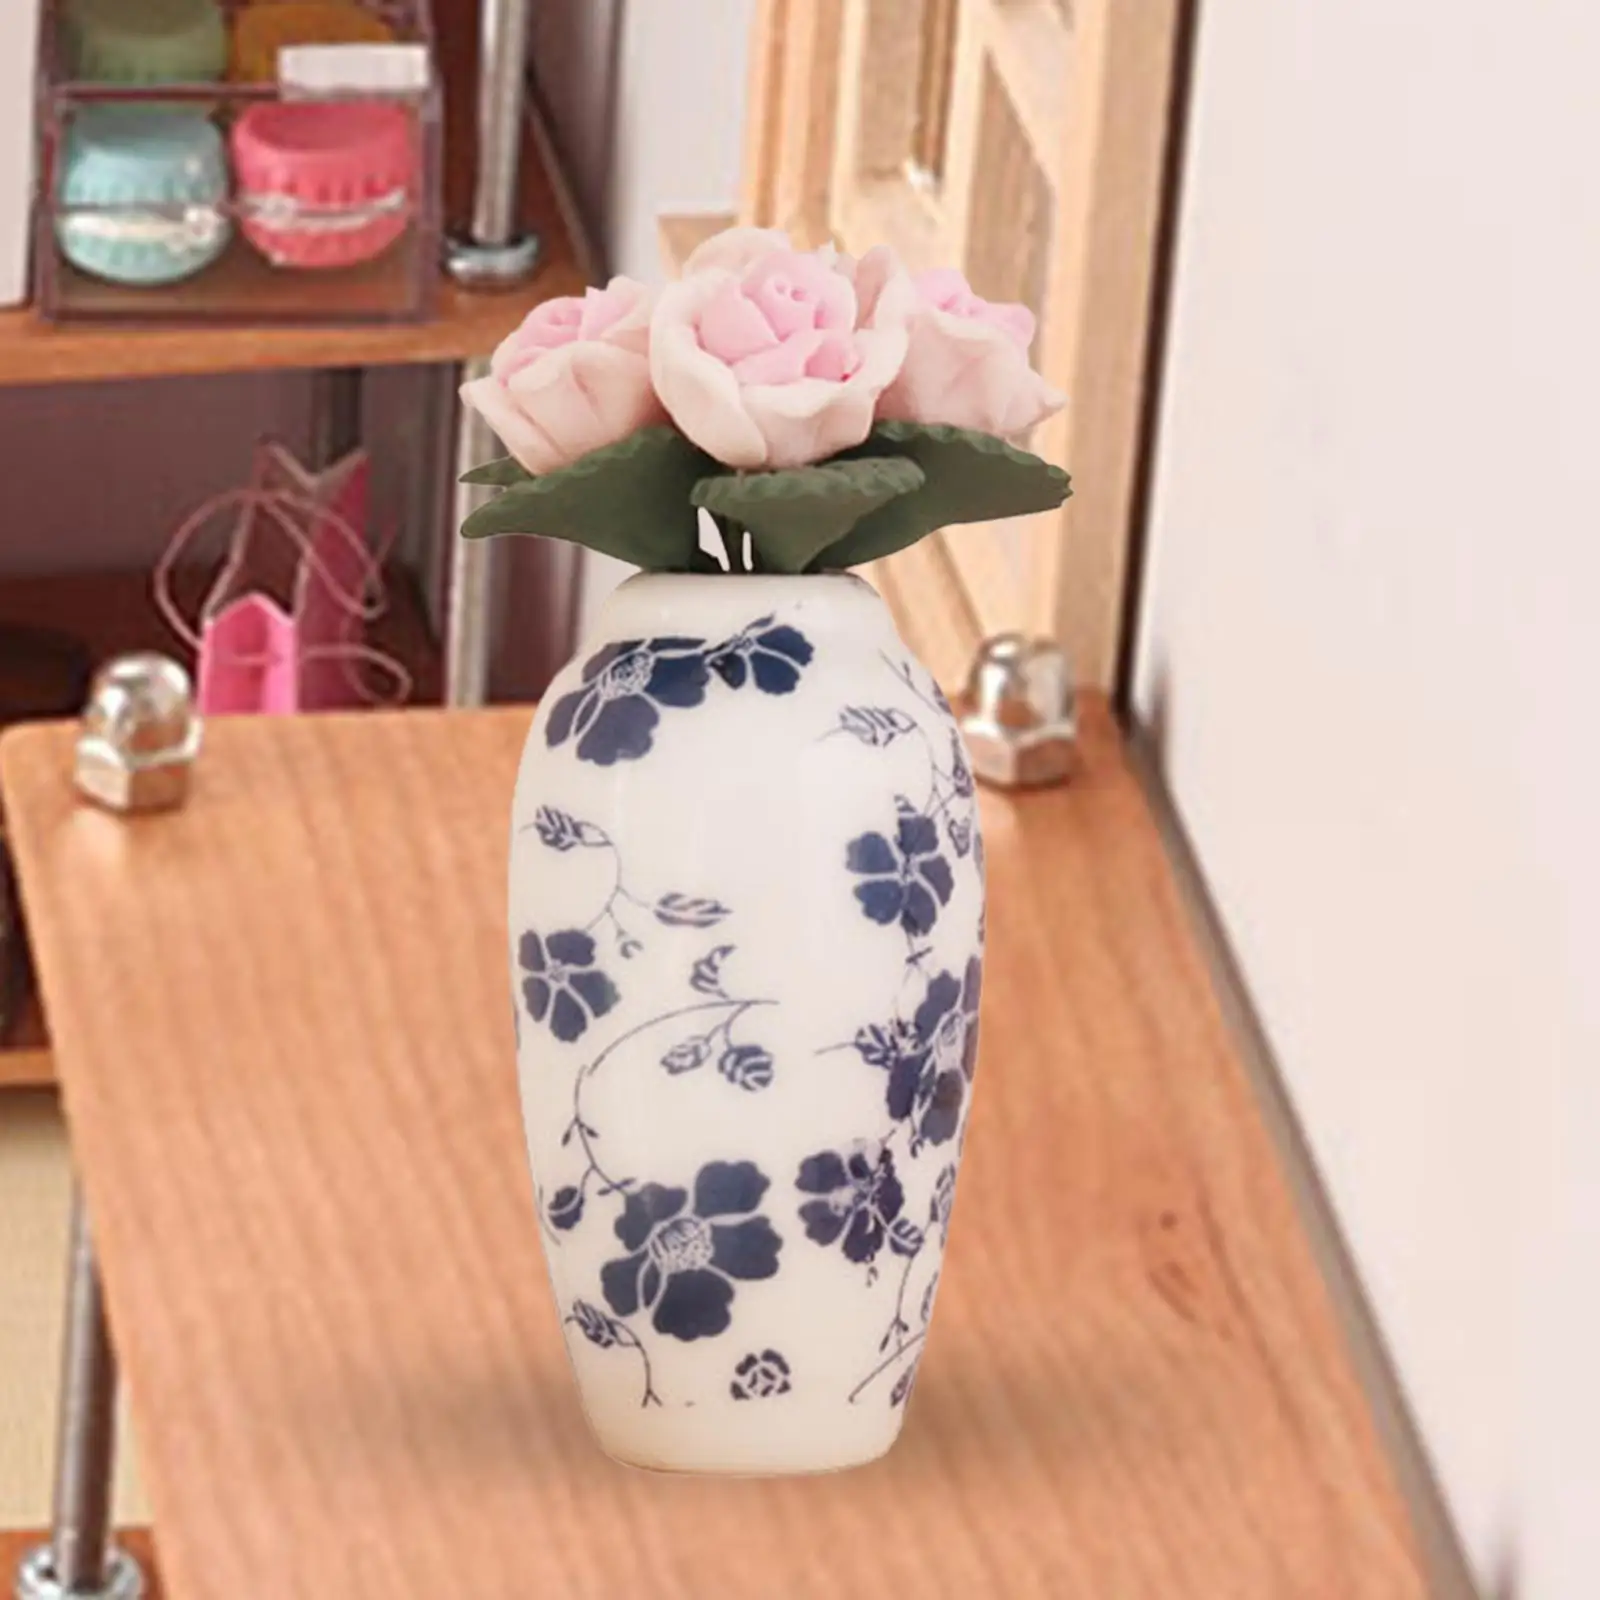 1/12 Dollhouse Miniature Potted Flower Educational Toys Accessories Desktop Decor DIY Bonsai Flower for Bedroom Living Room